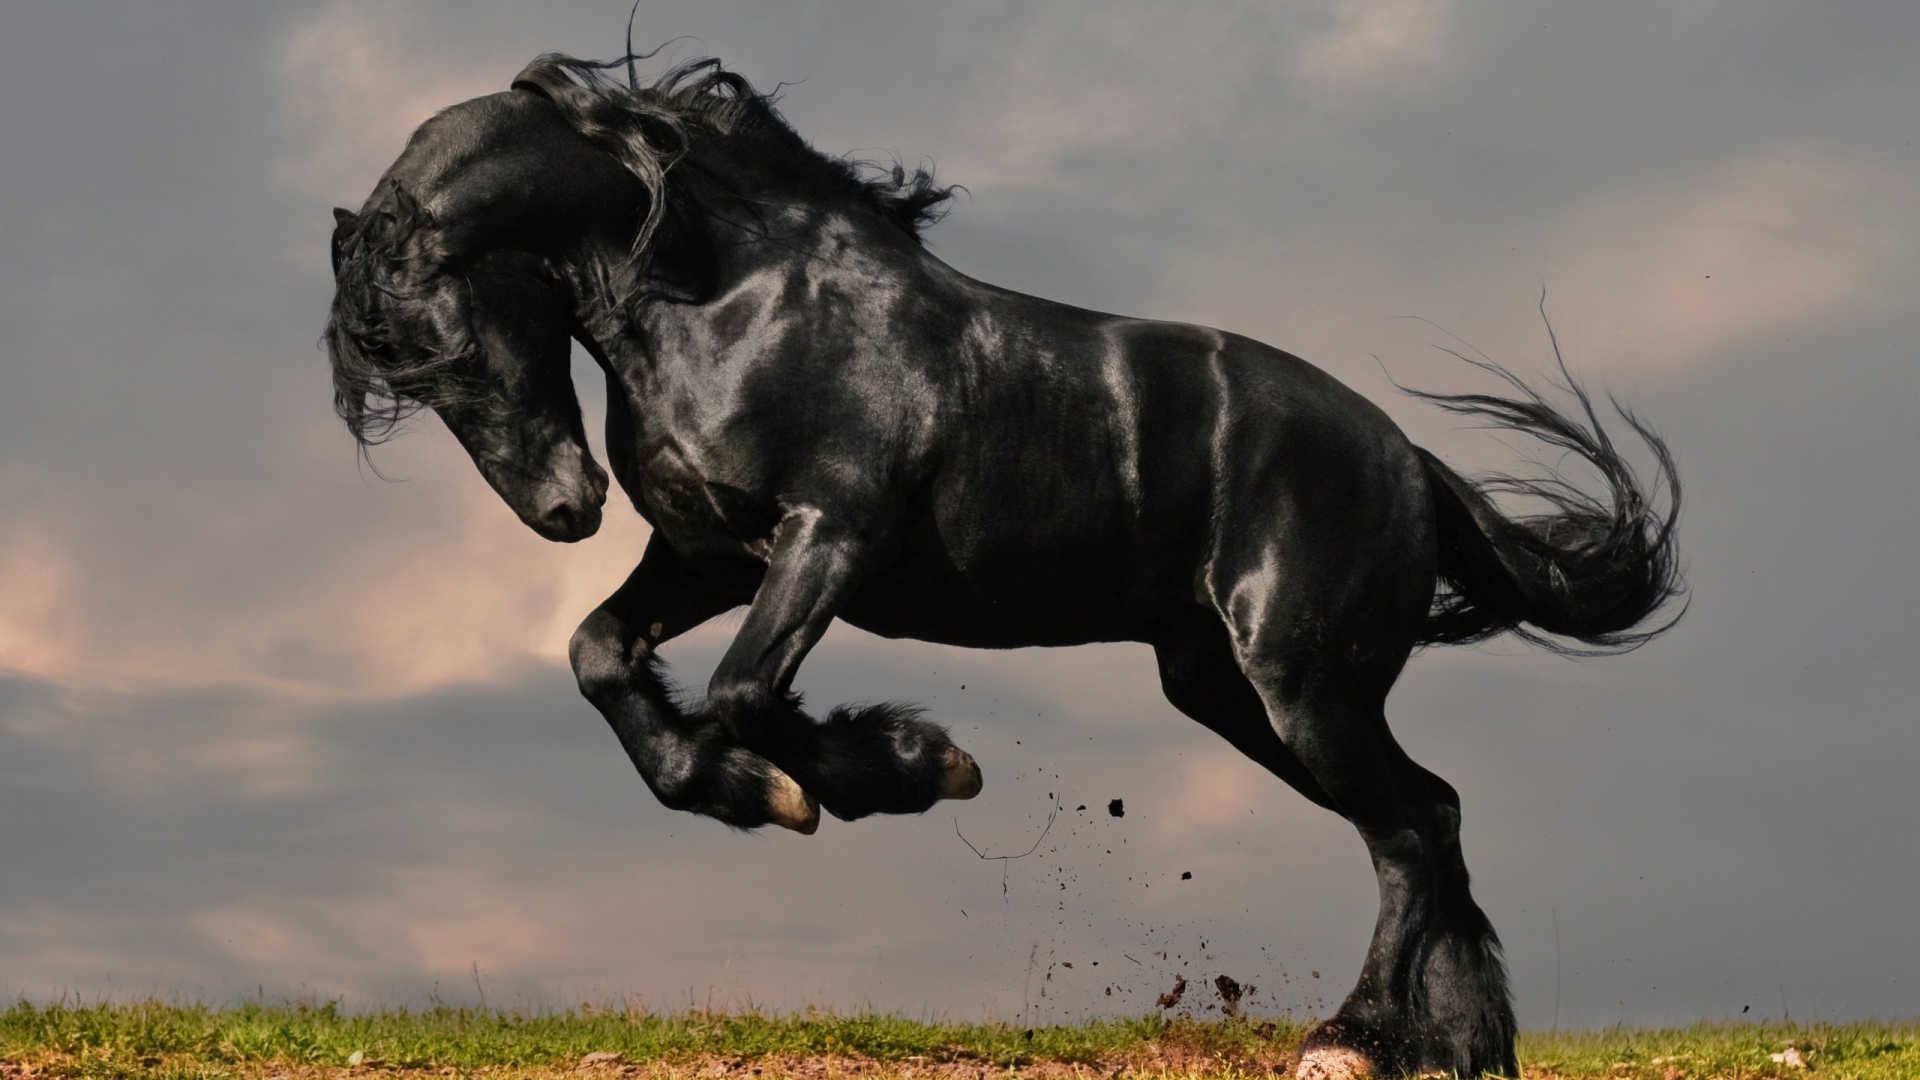 Gorgeous Black Horse for 1920 x 1080 HDTV 1080p resolution